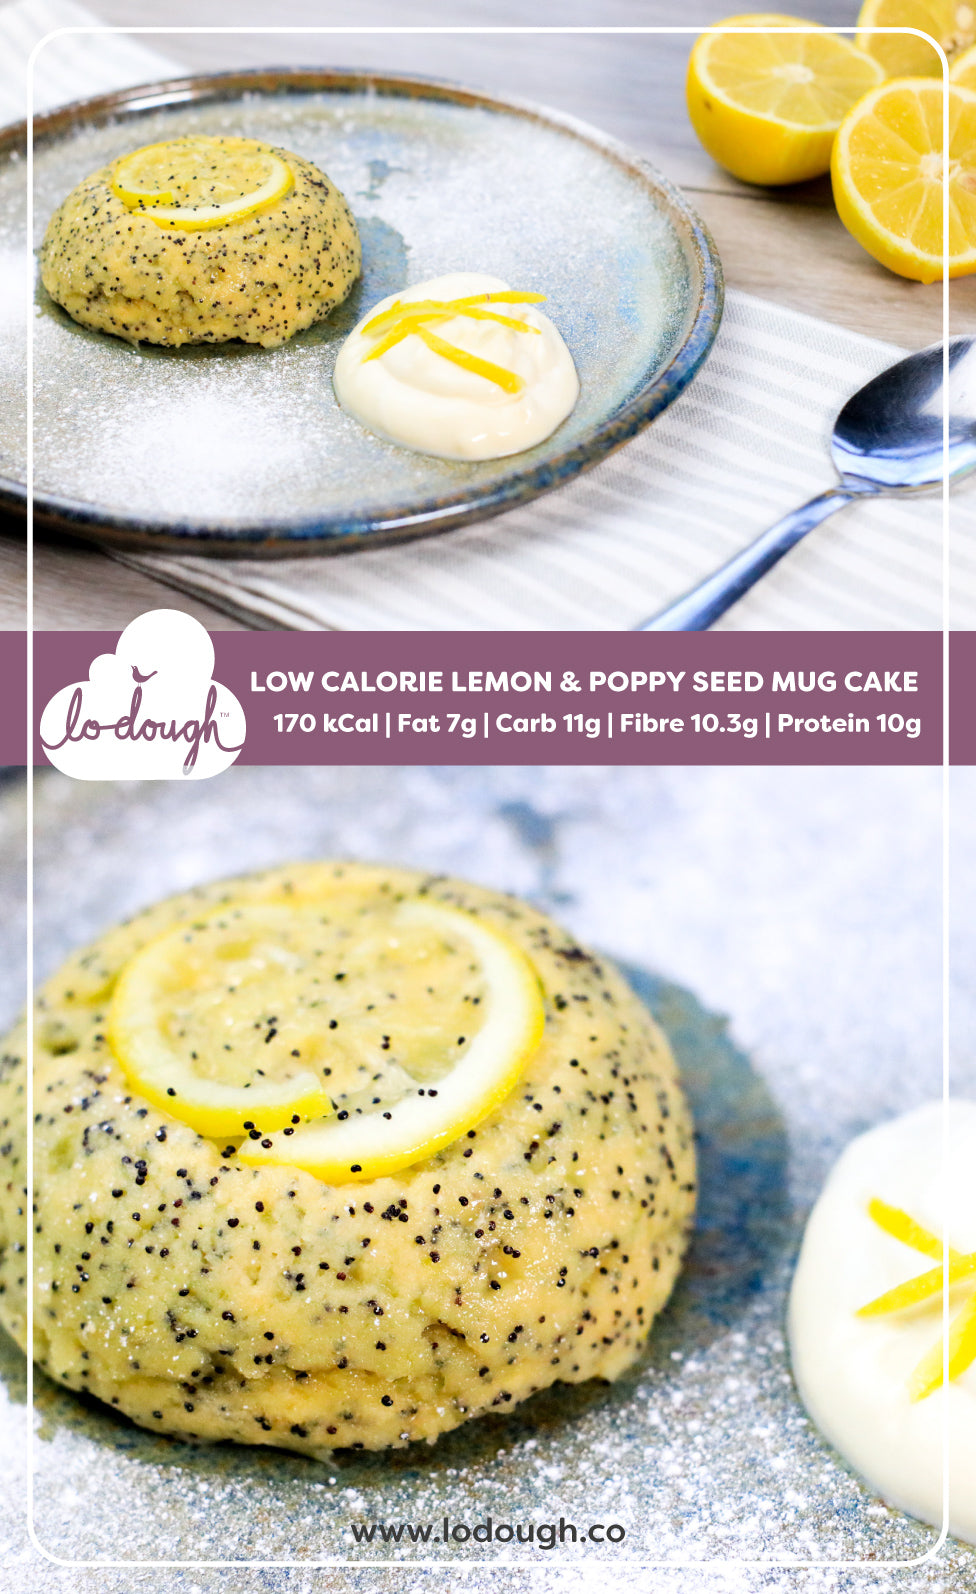 Low Calorie Lemon & Poppy Seed Mug Cake